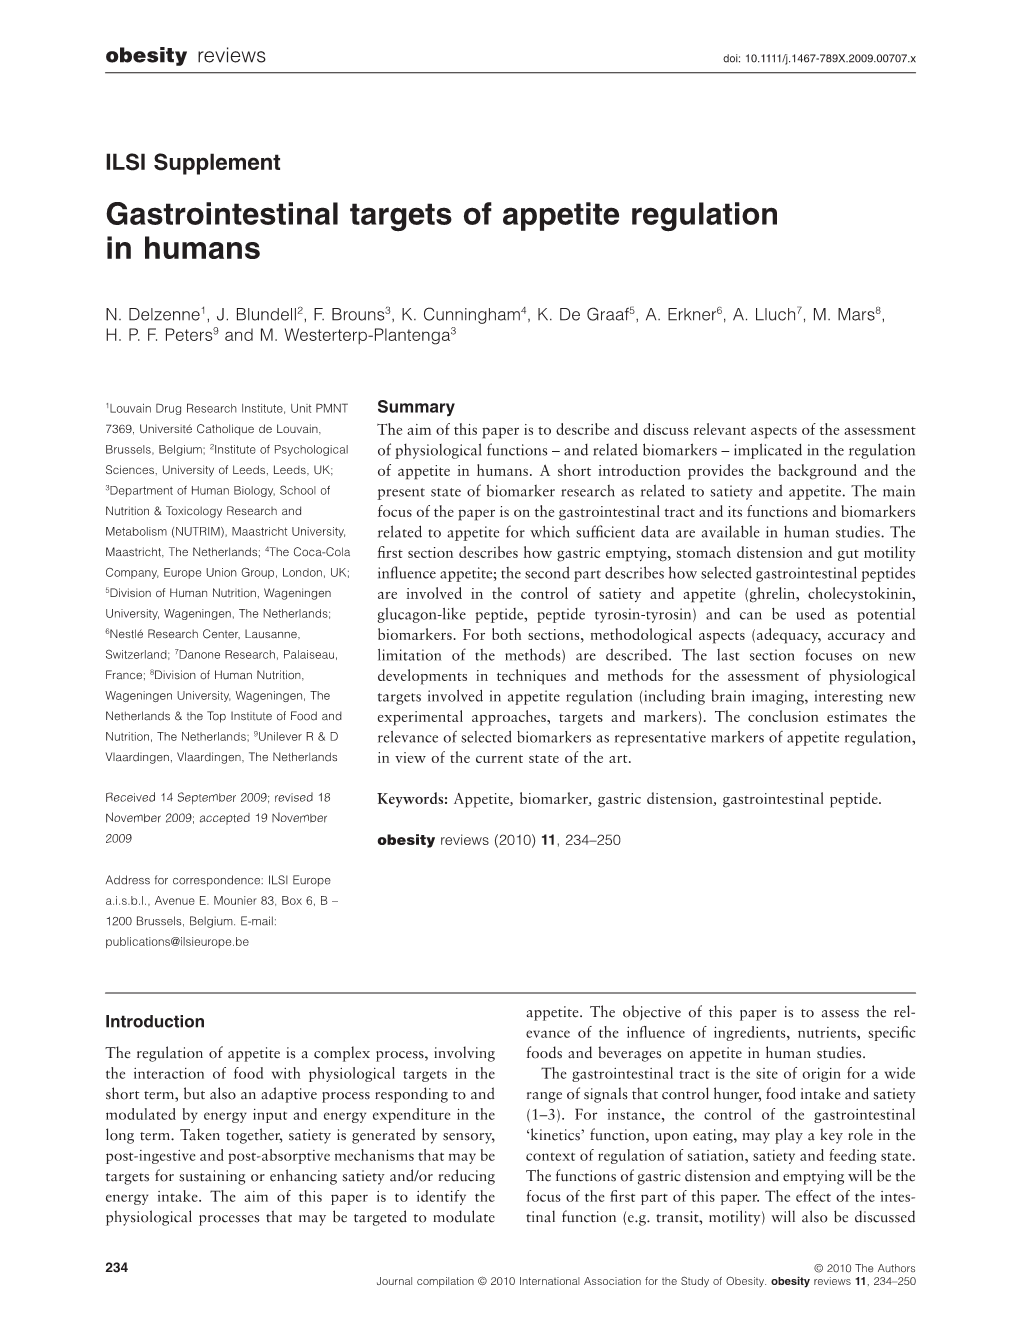 Gastrointestinal Targets of Appetite Regulation